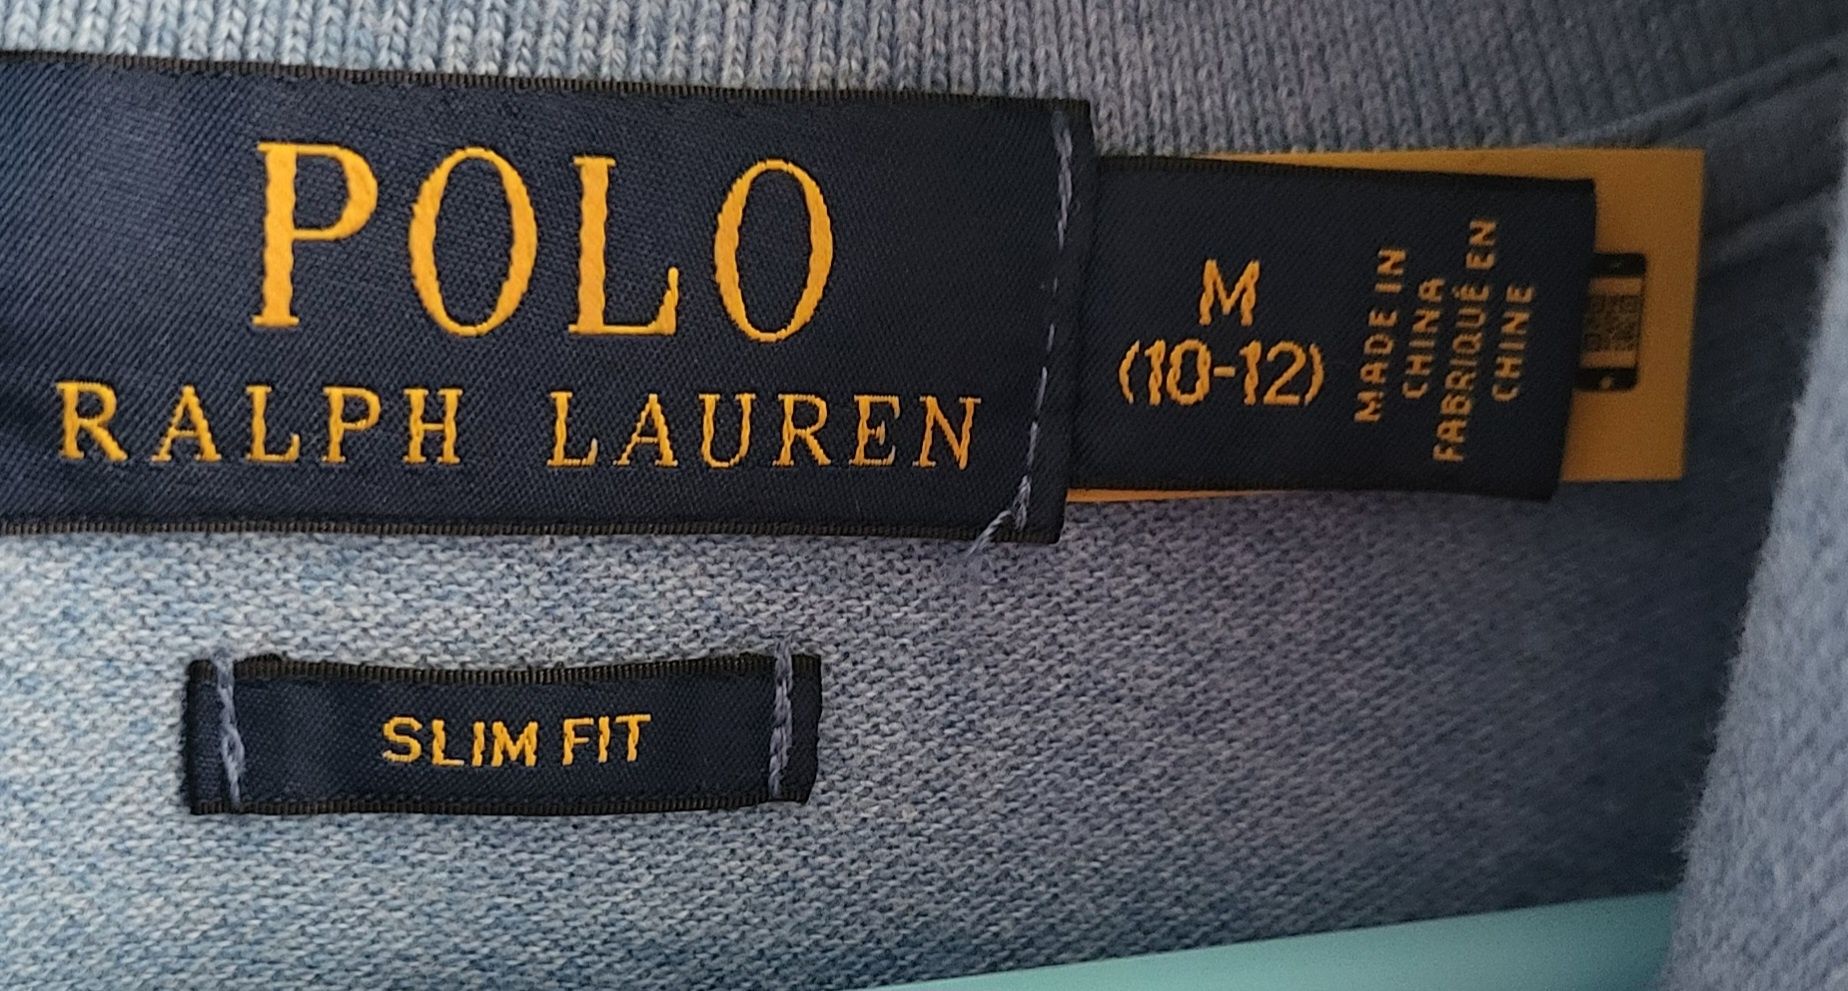 Tricou copii Polo Ralph Lauren, marime M (10-12 ani)